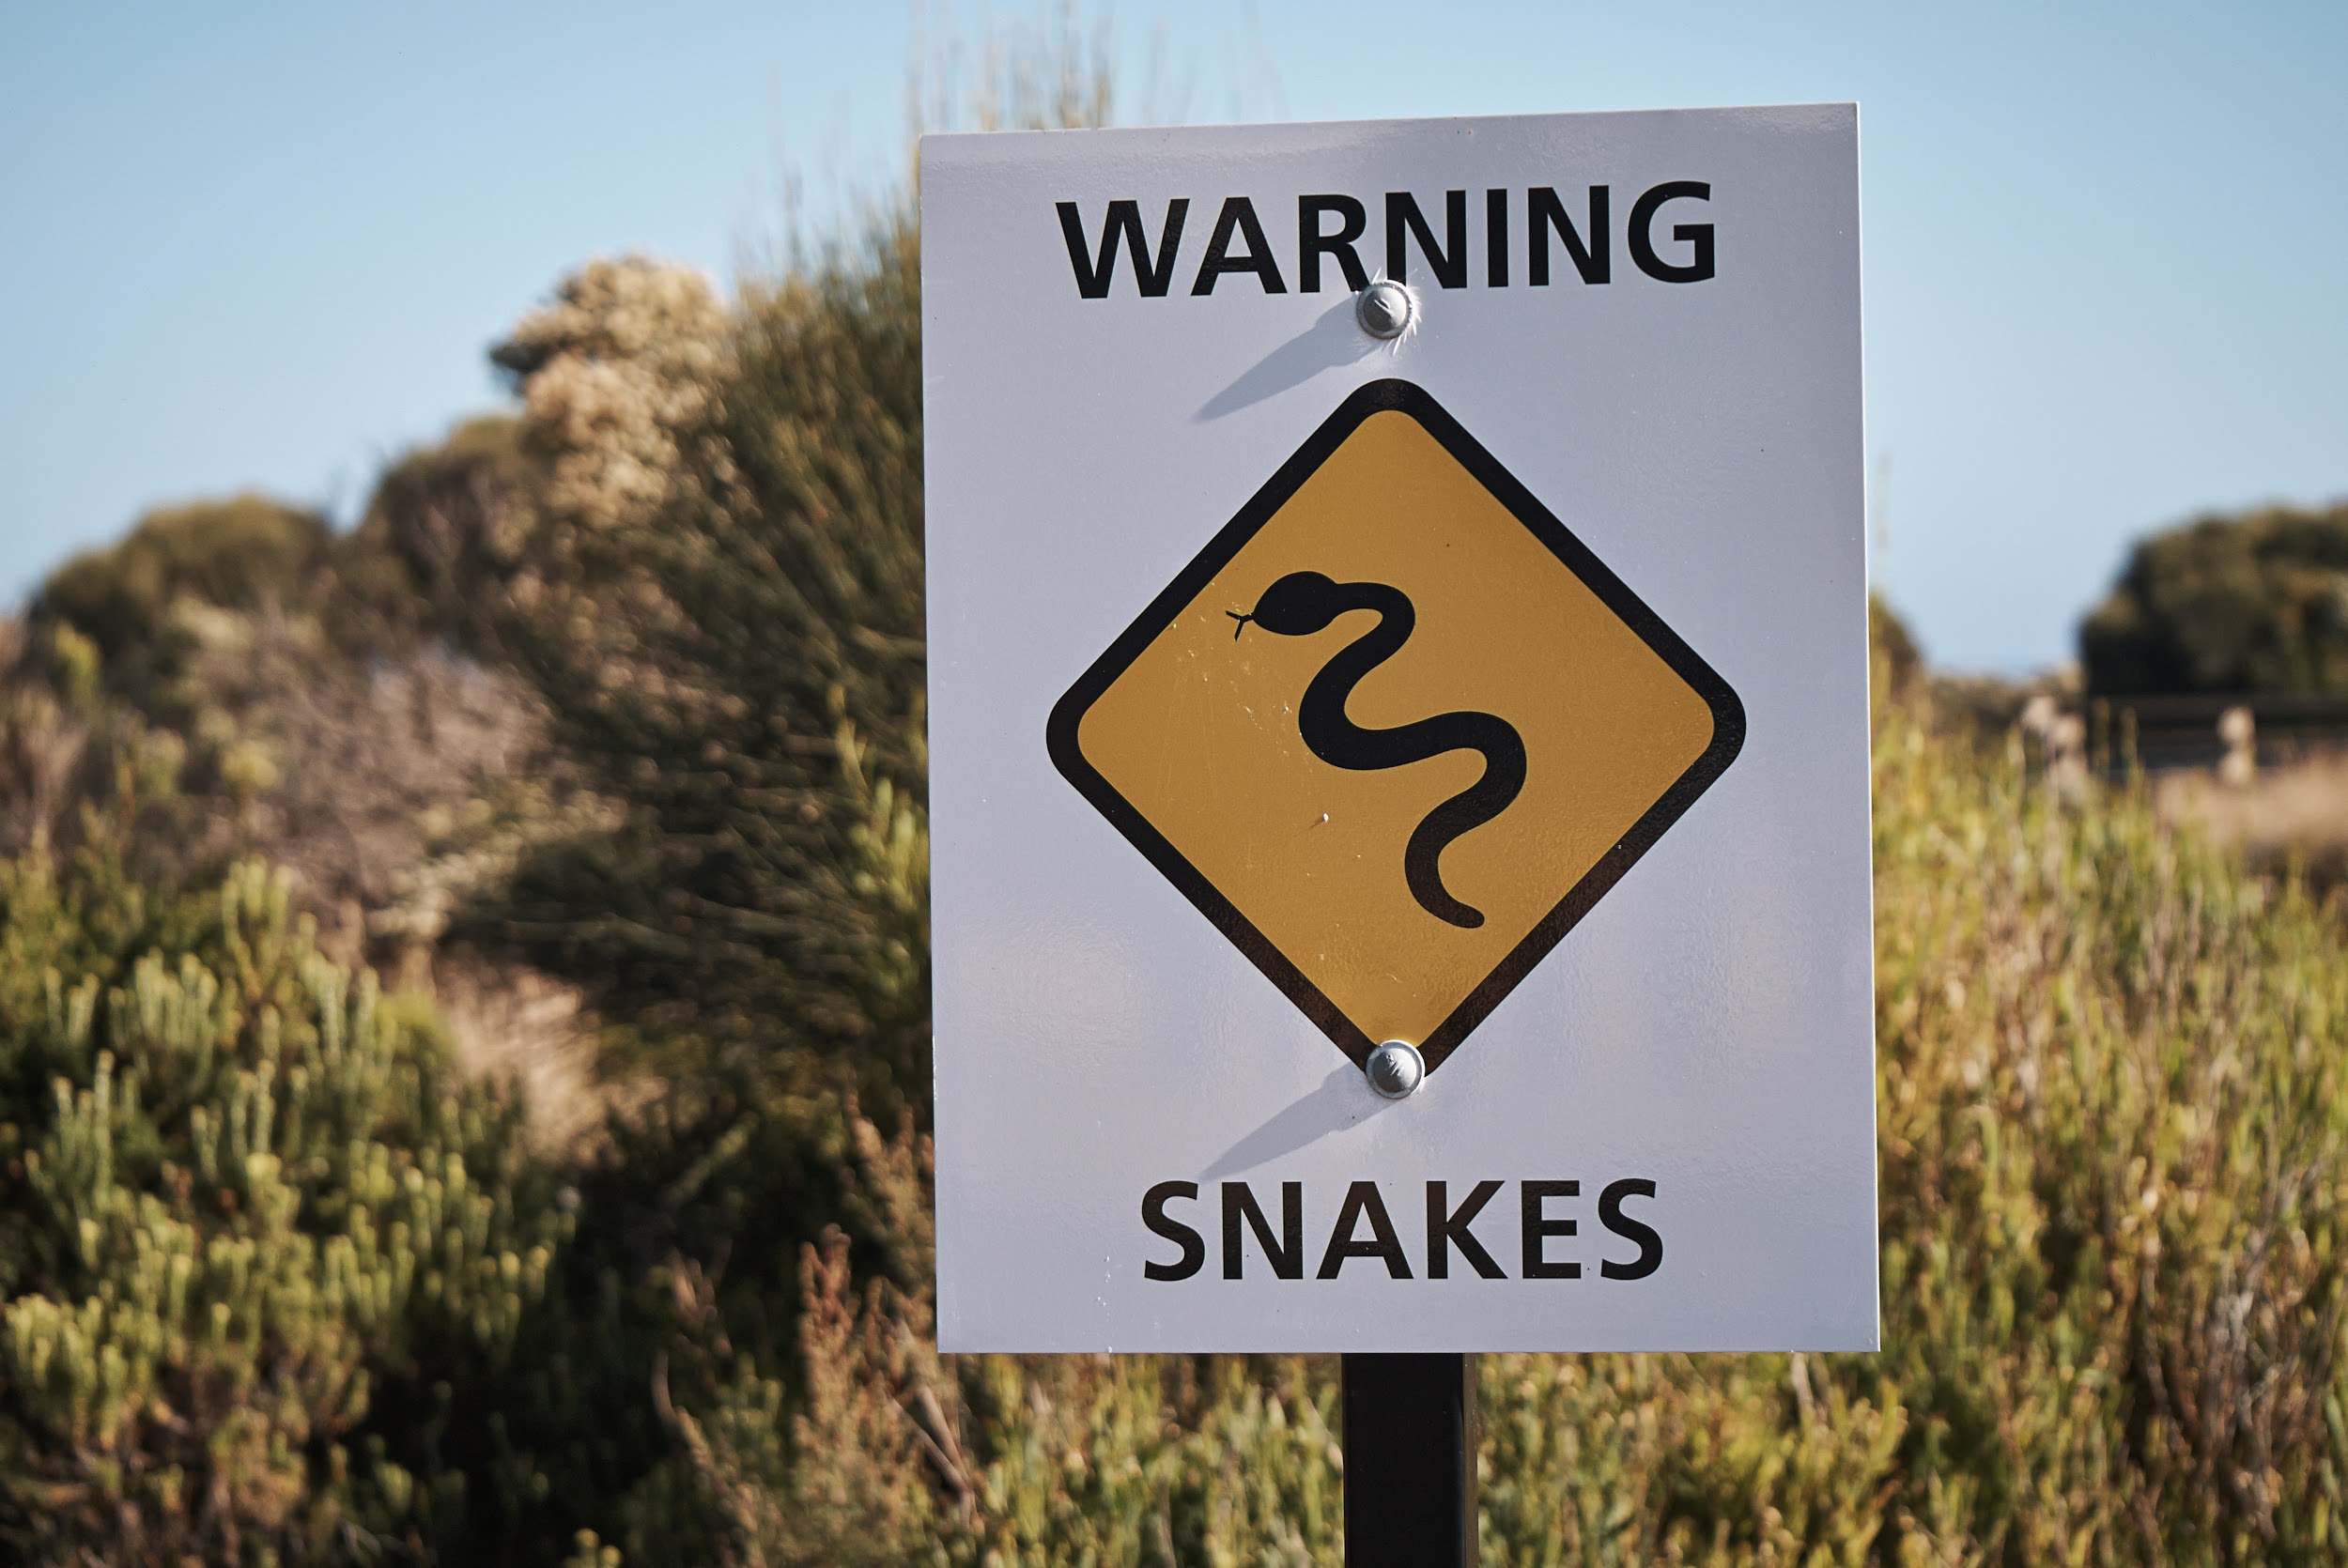 Warning Snakes - Beware of Snakes Sign